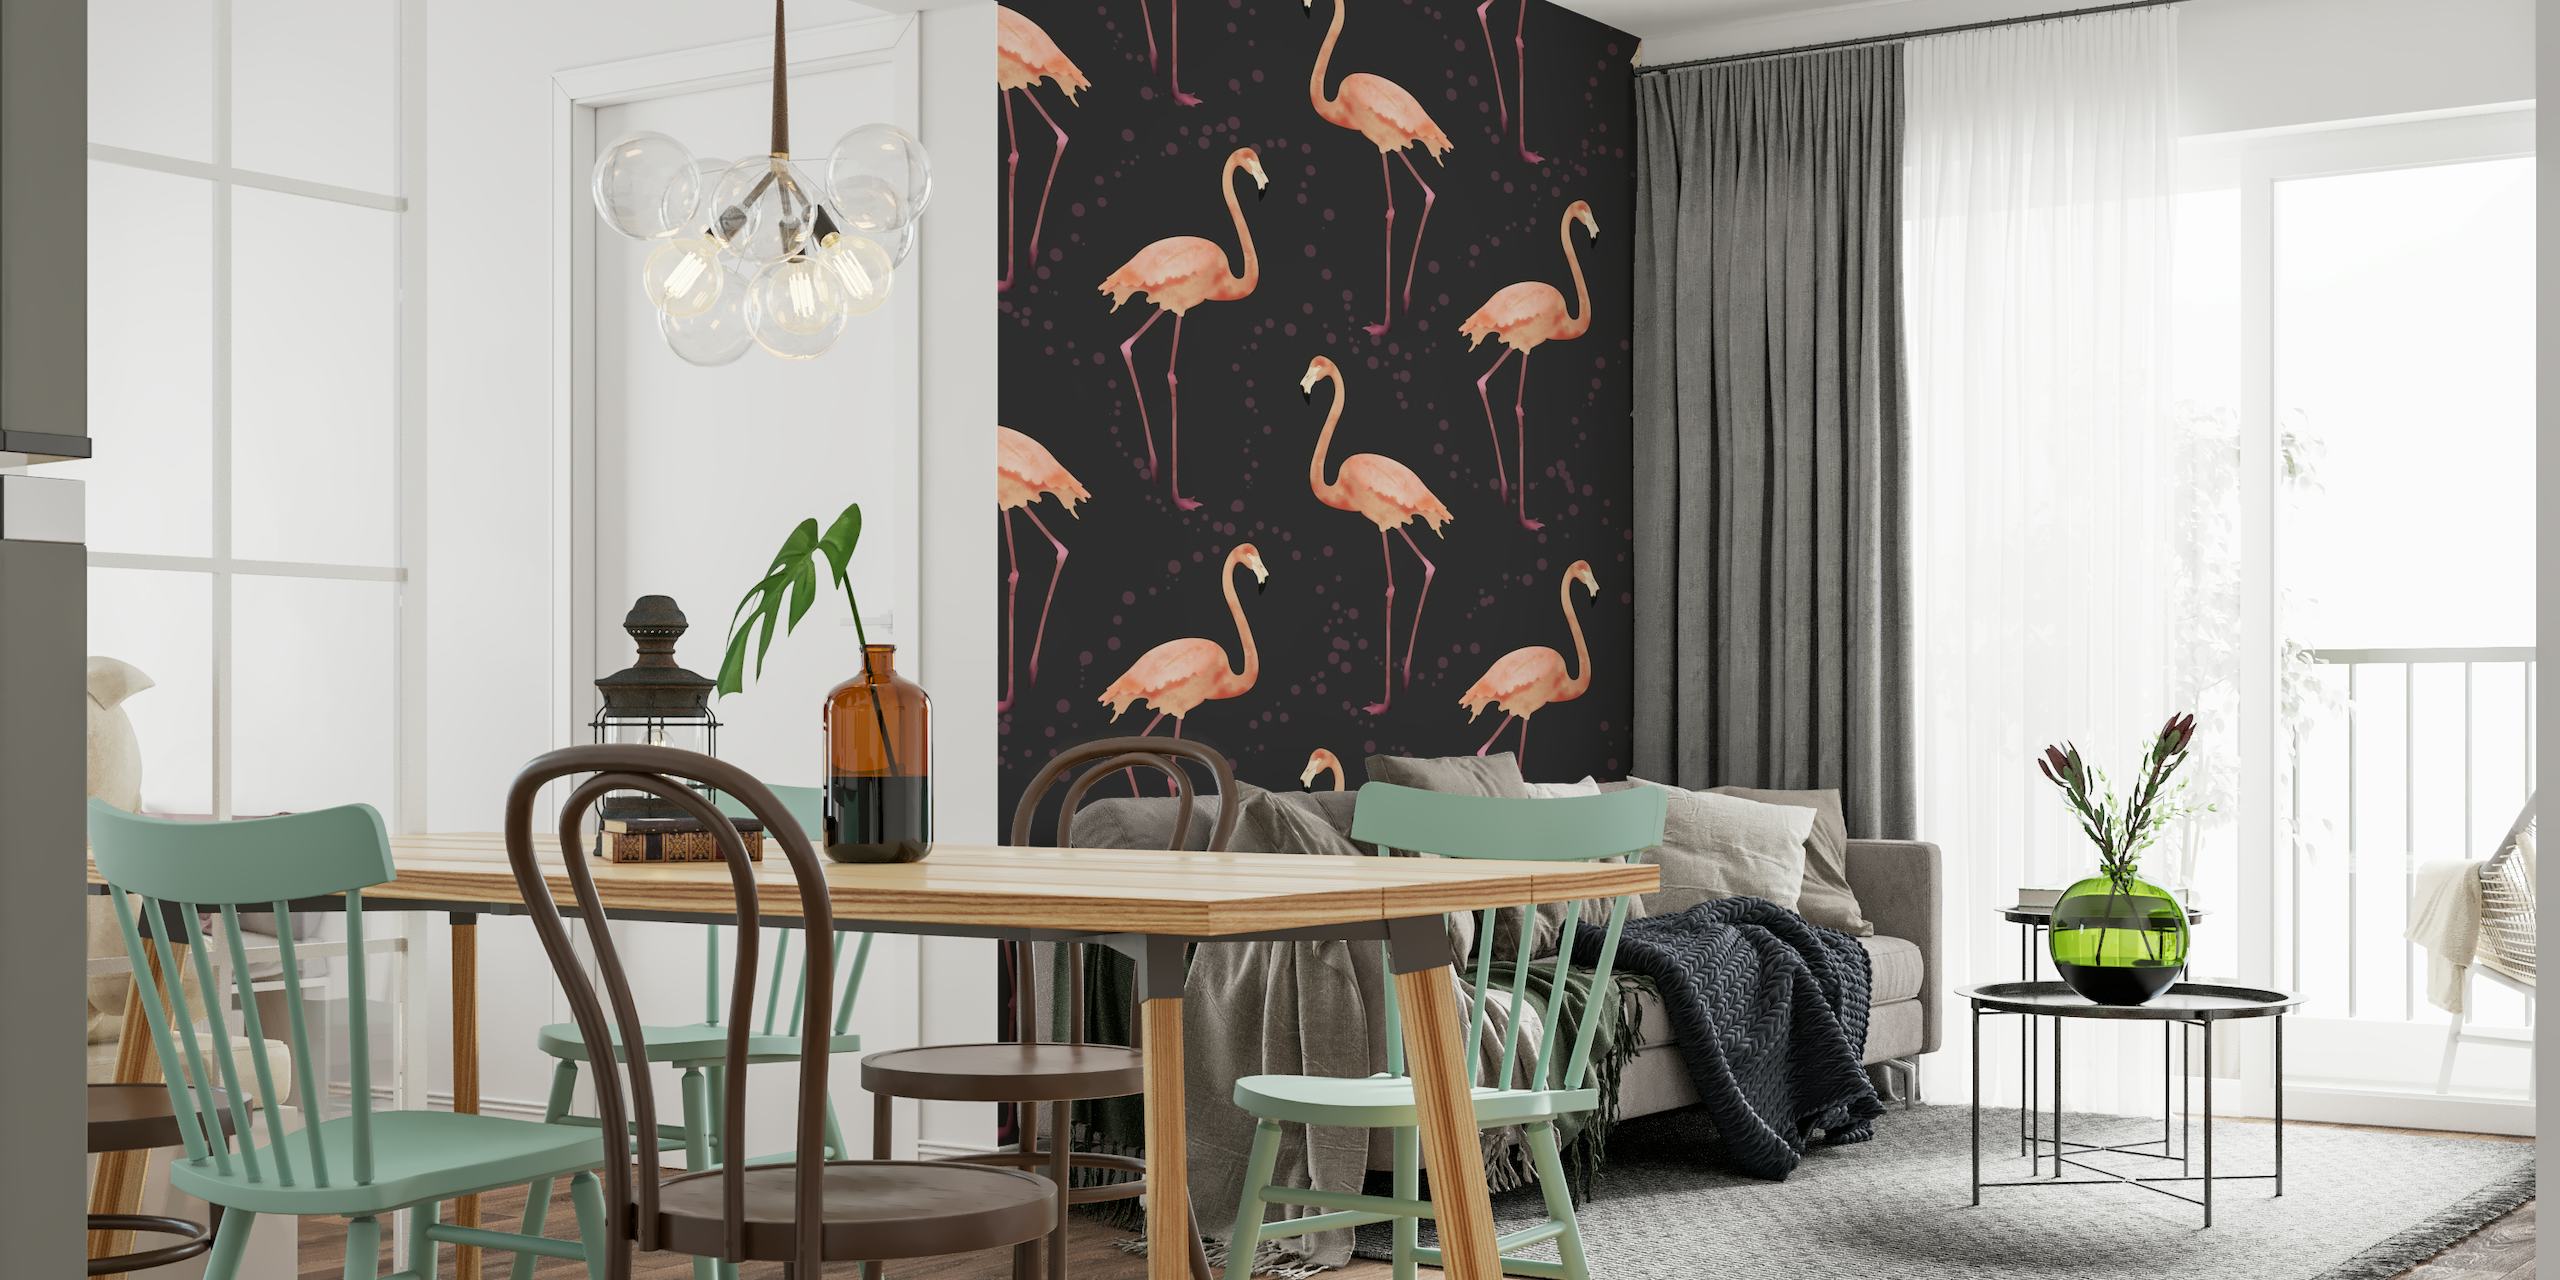 The Flamingo Dance fuchsia behang